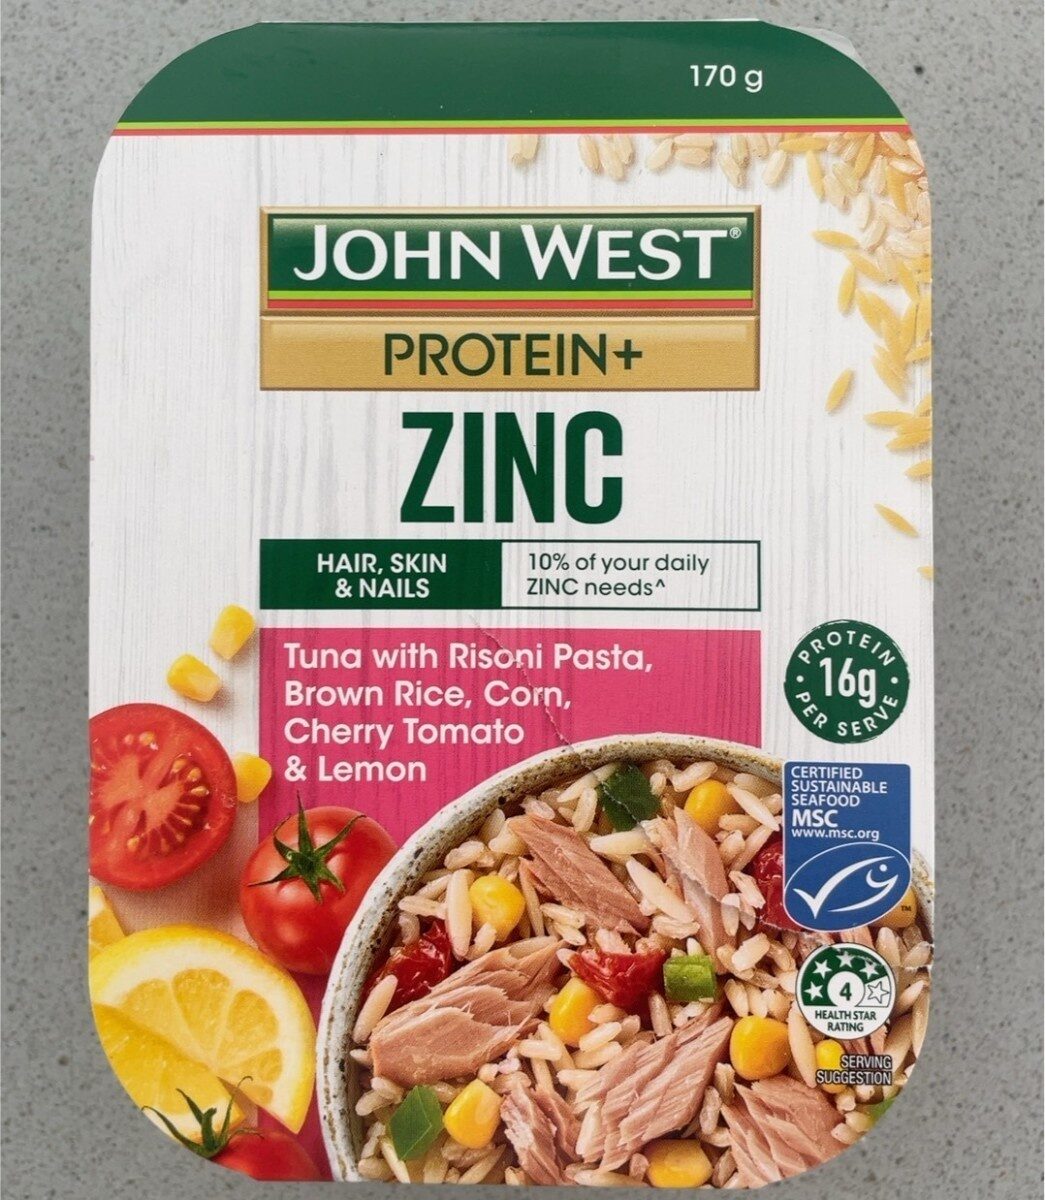 John west protein + zinc - Product